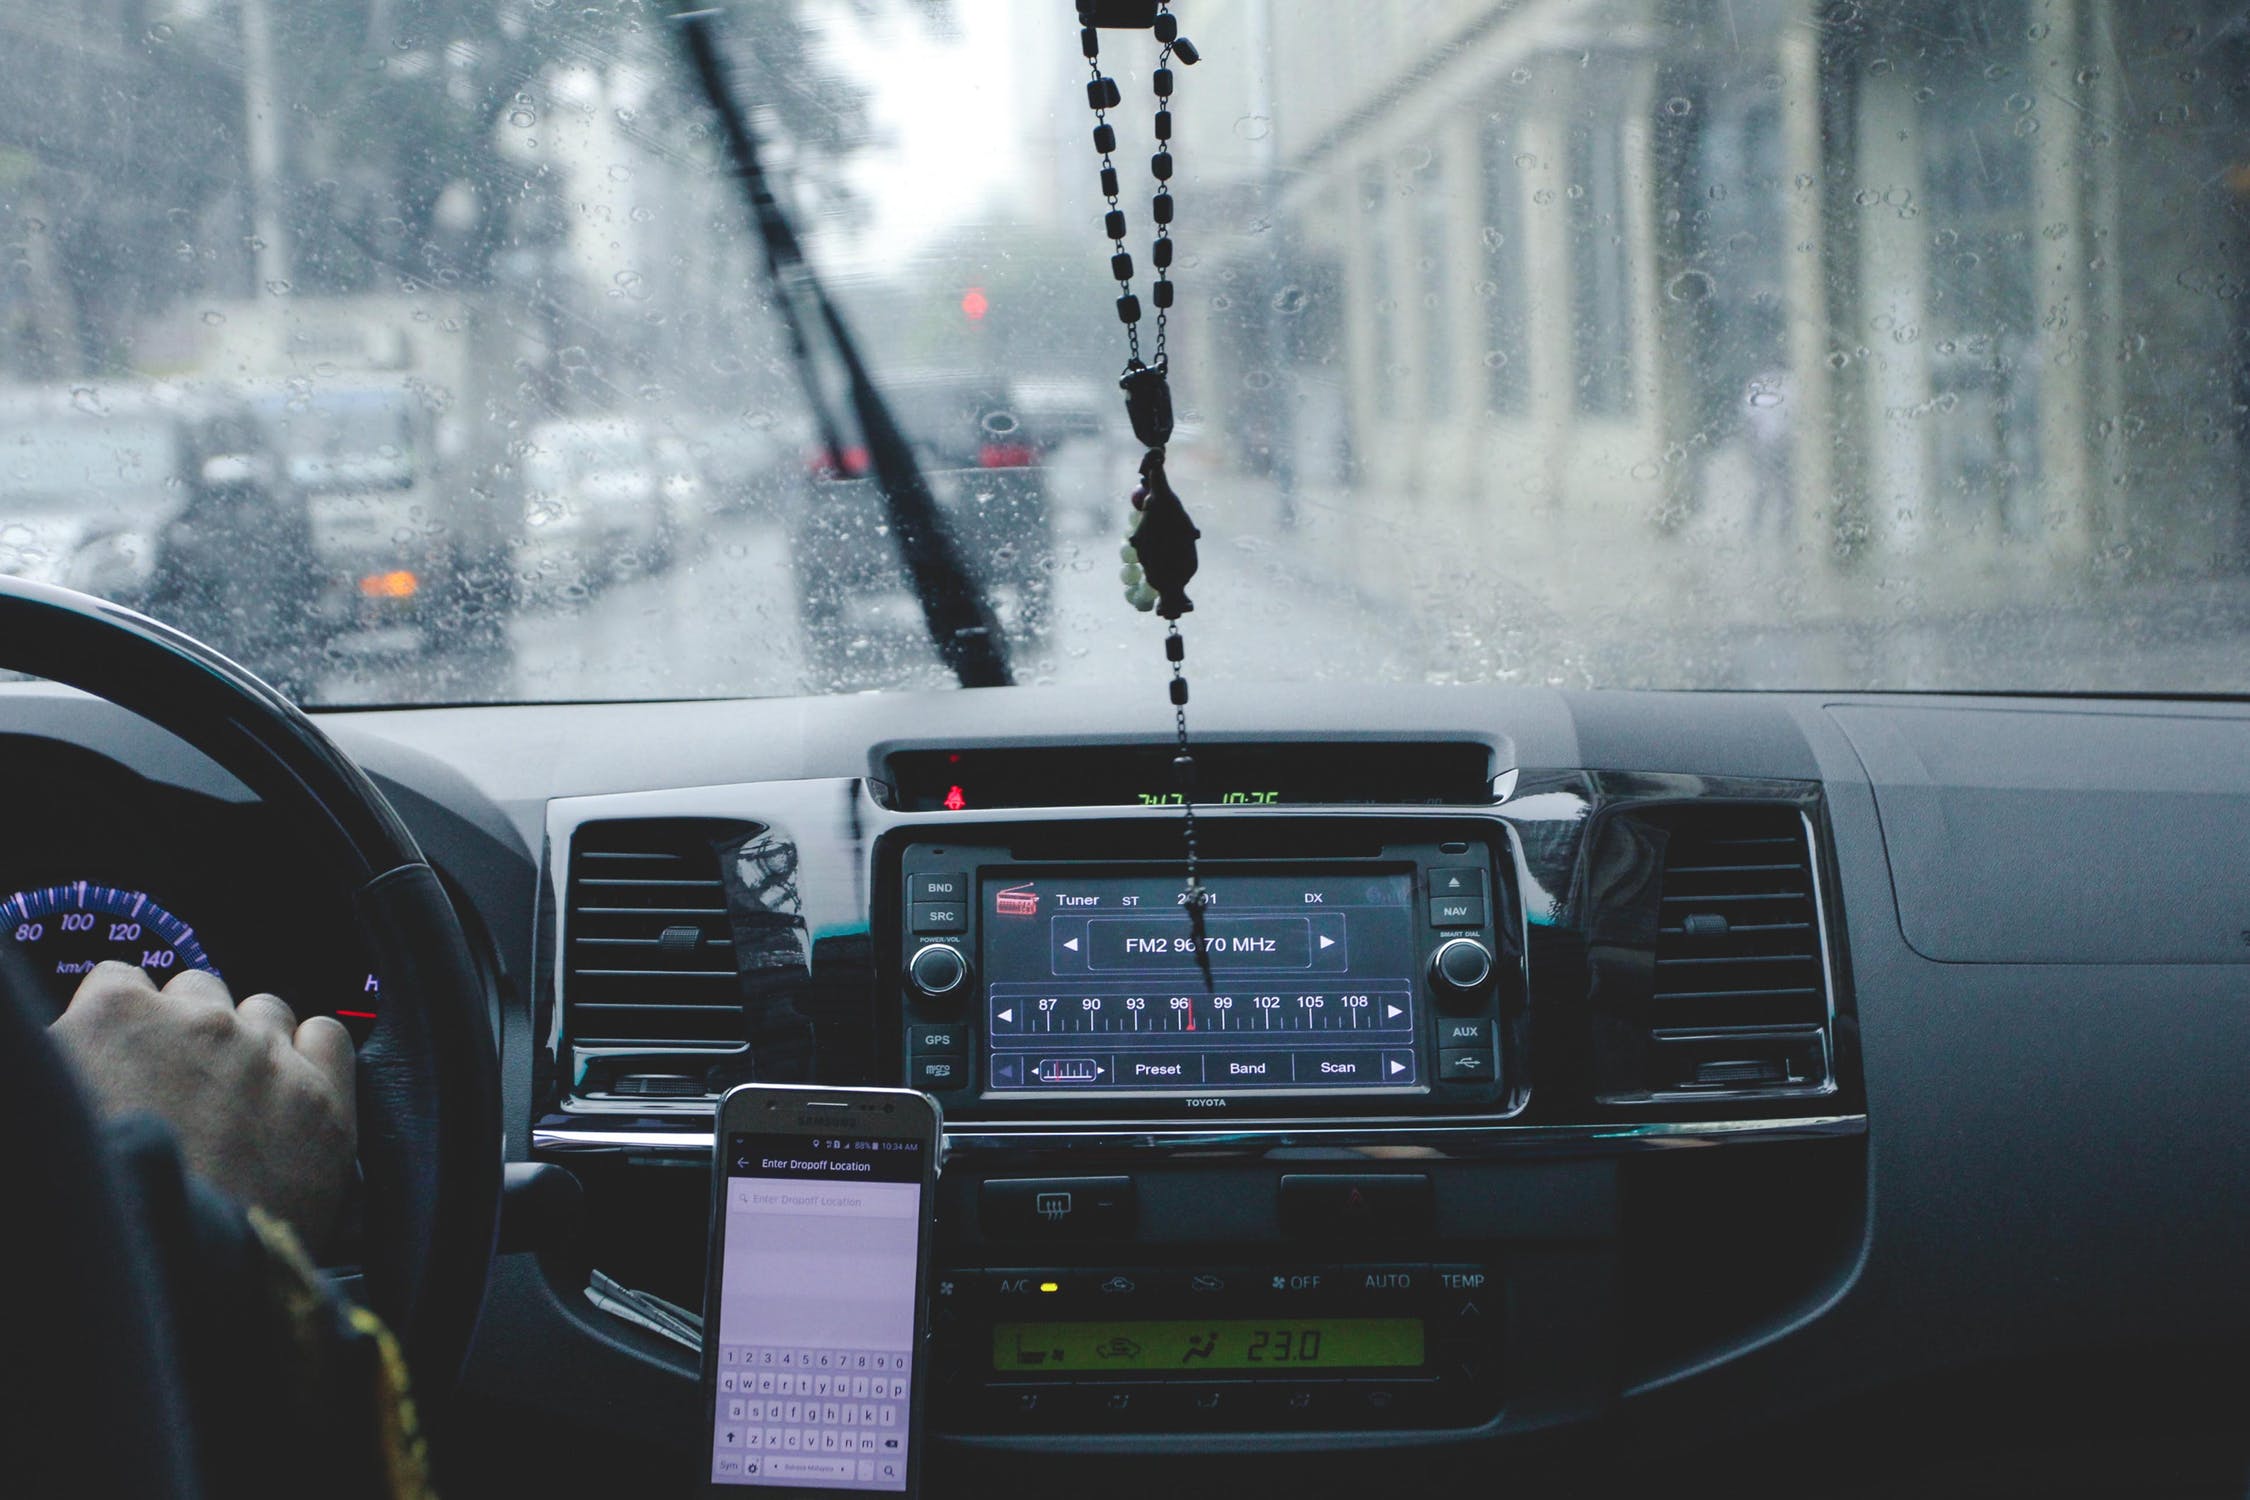 How To Defog Car Windows In Rain?